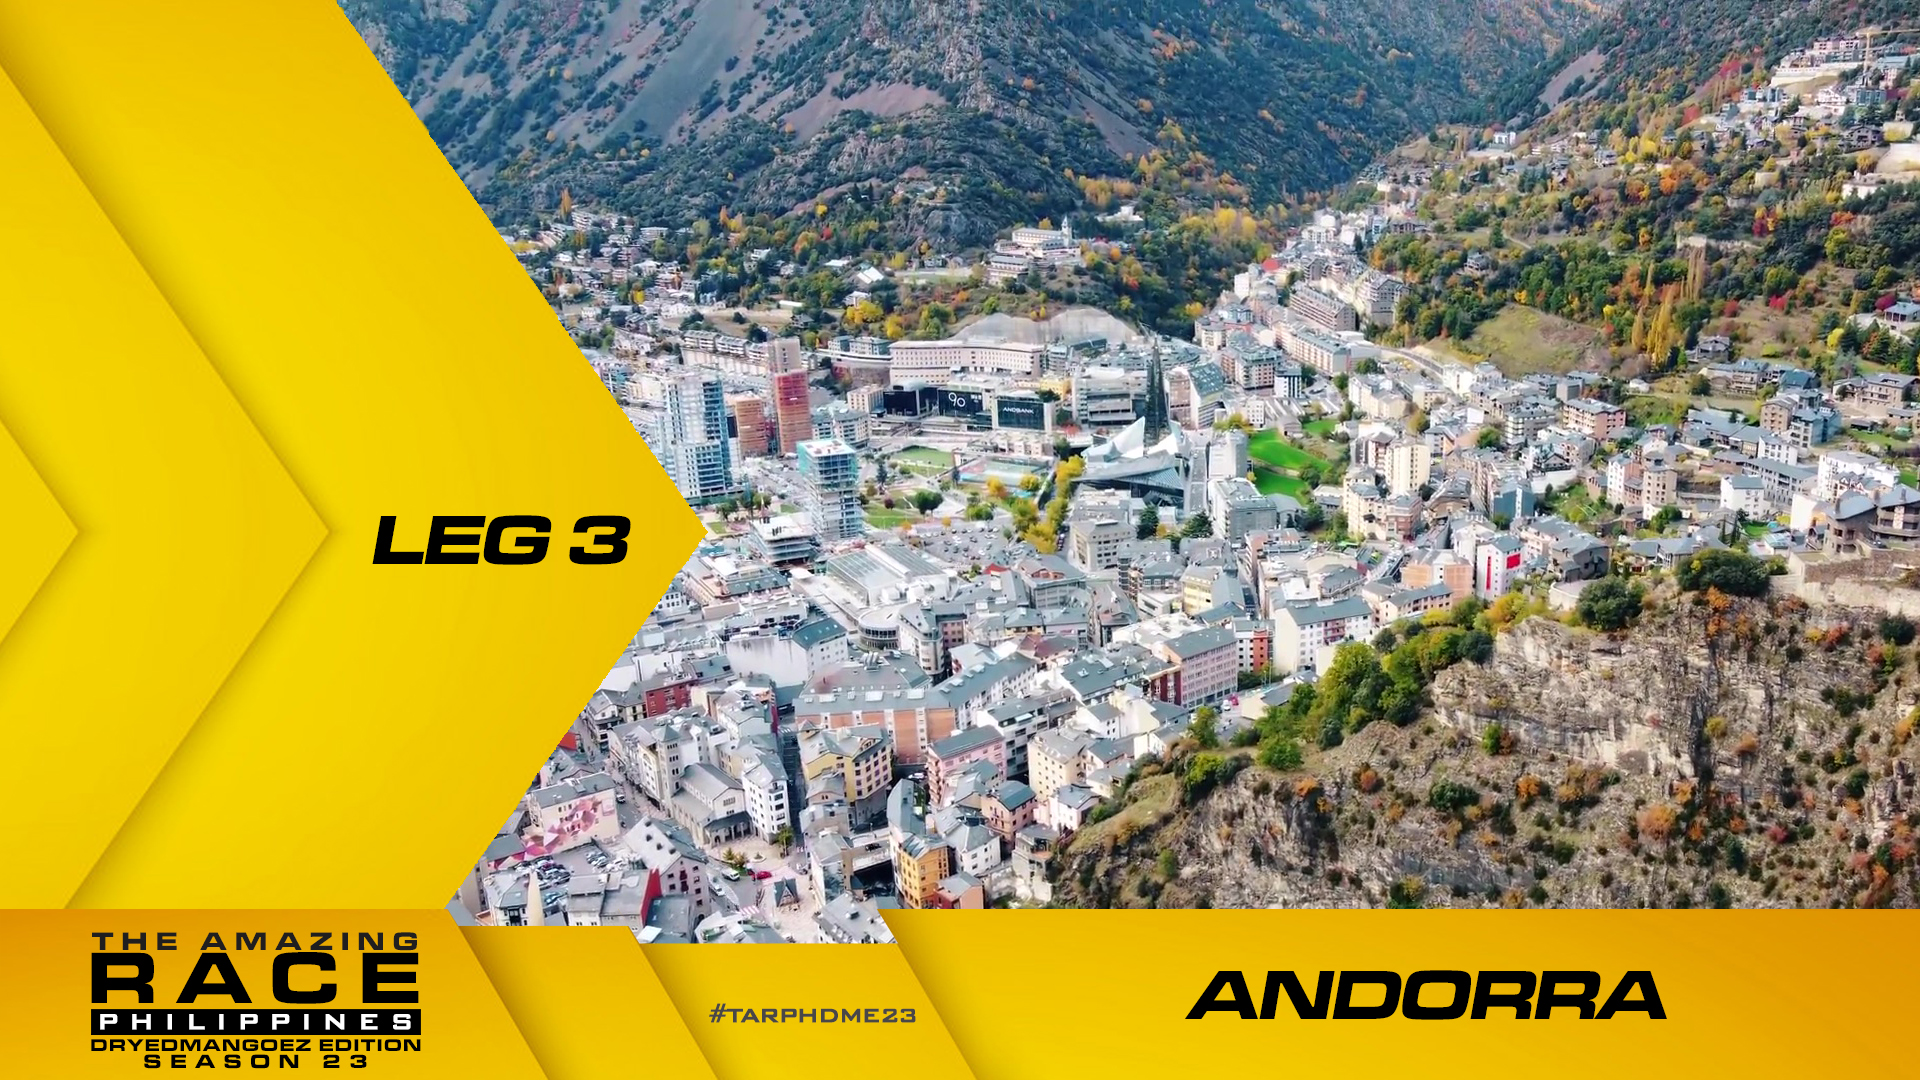 The Amazing Race Philippines: DryedMangoez Edition Season 23, Leg 3 – Andorra